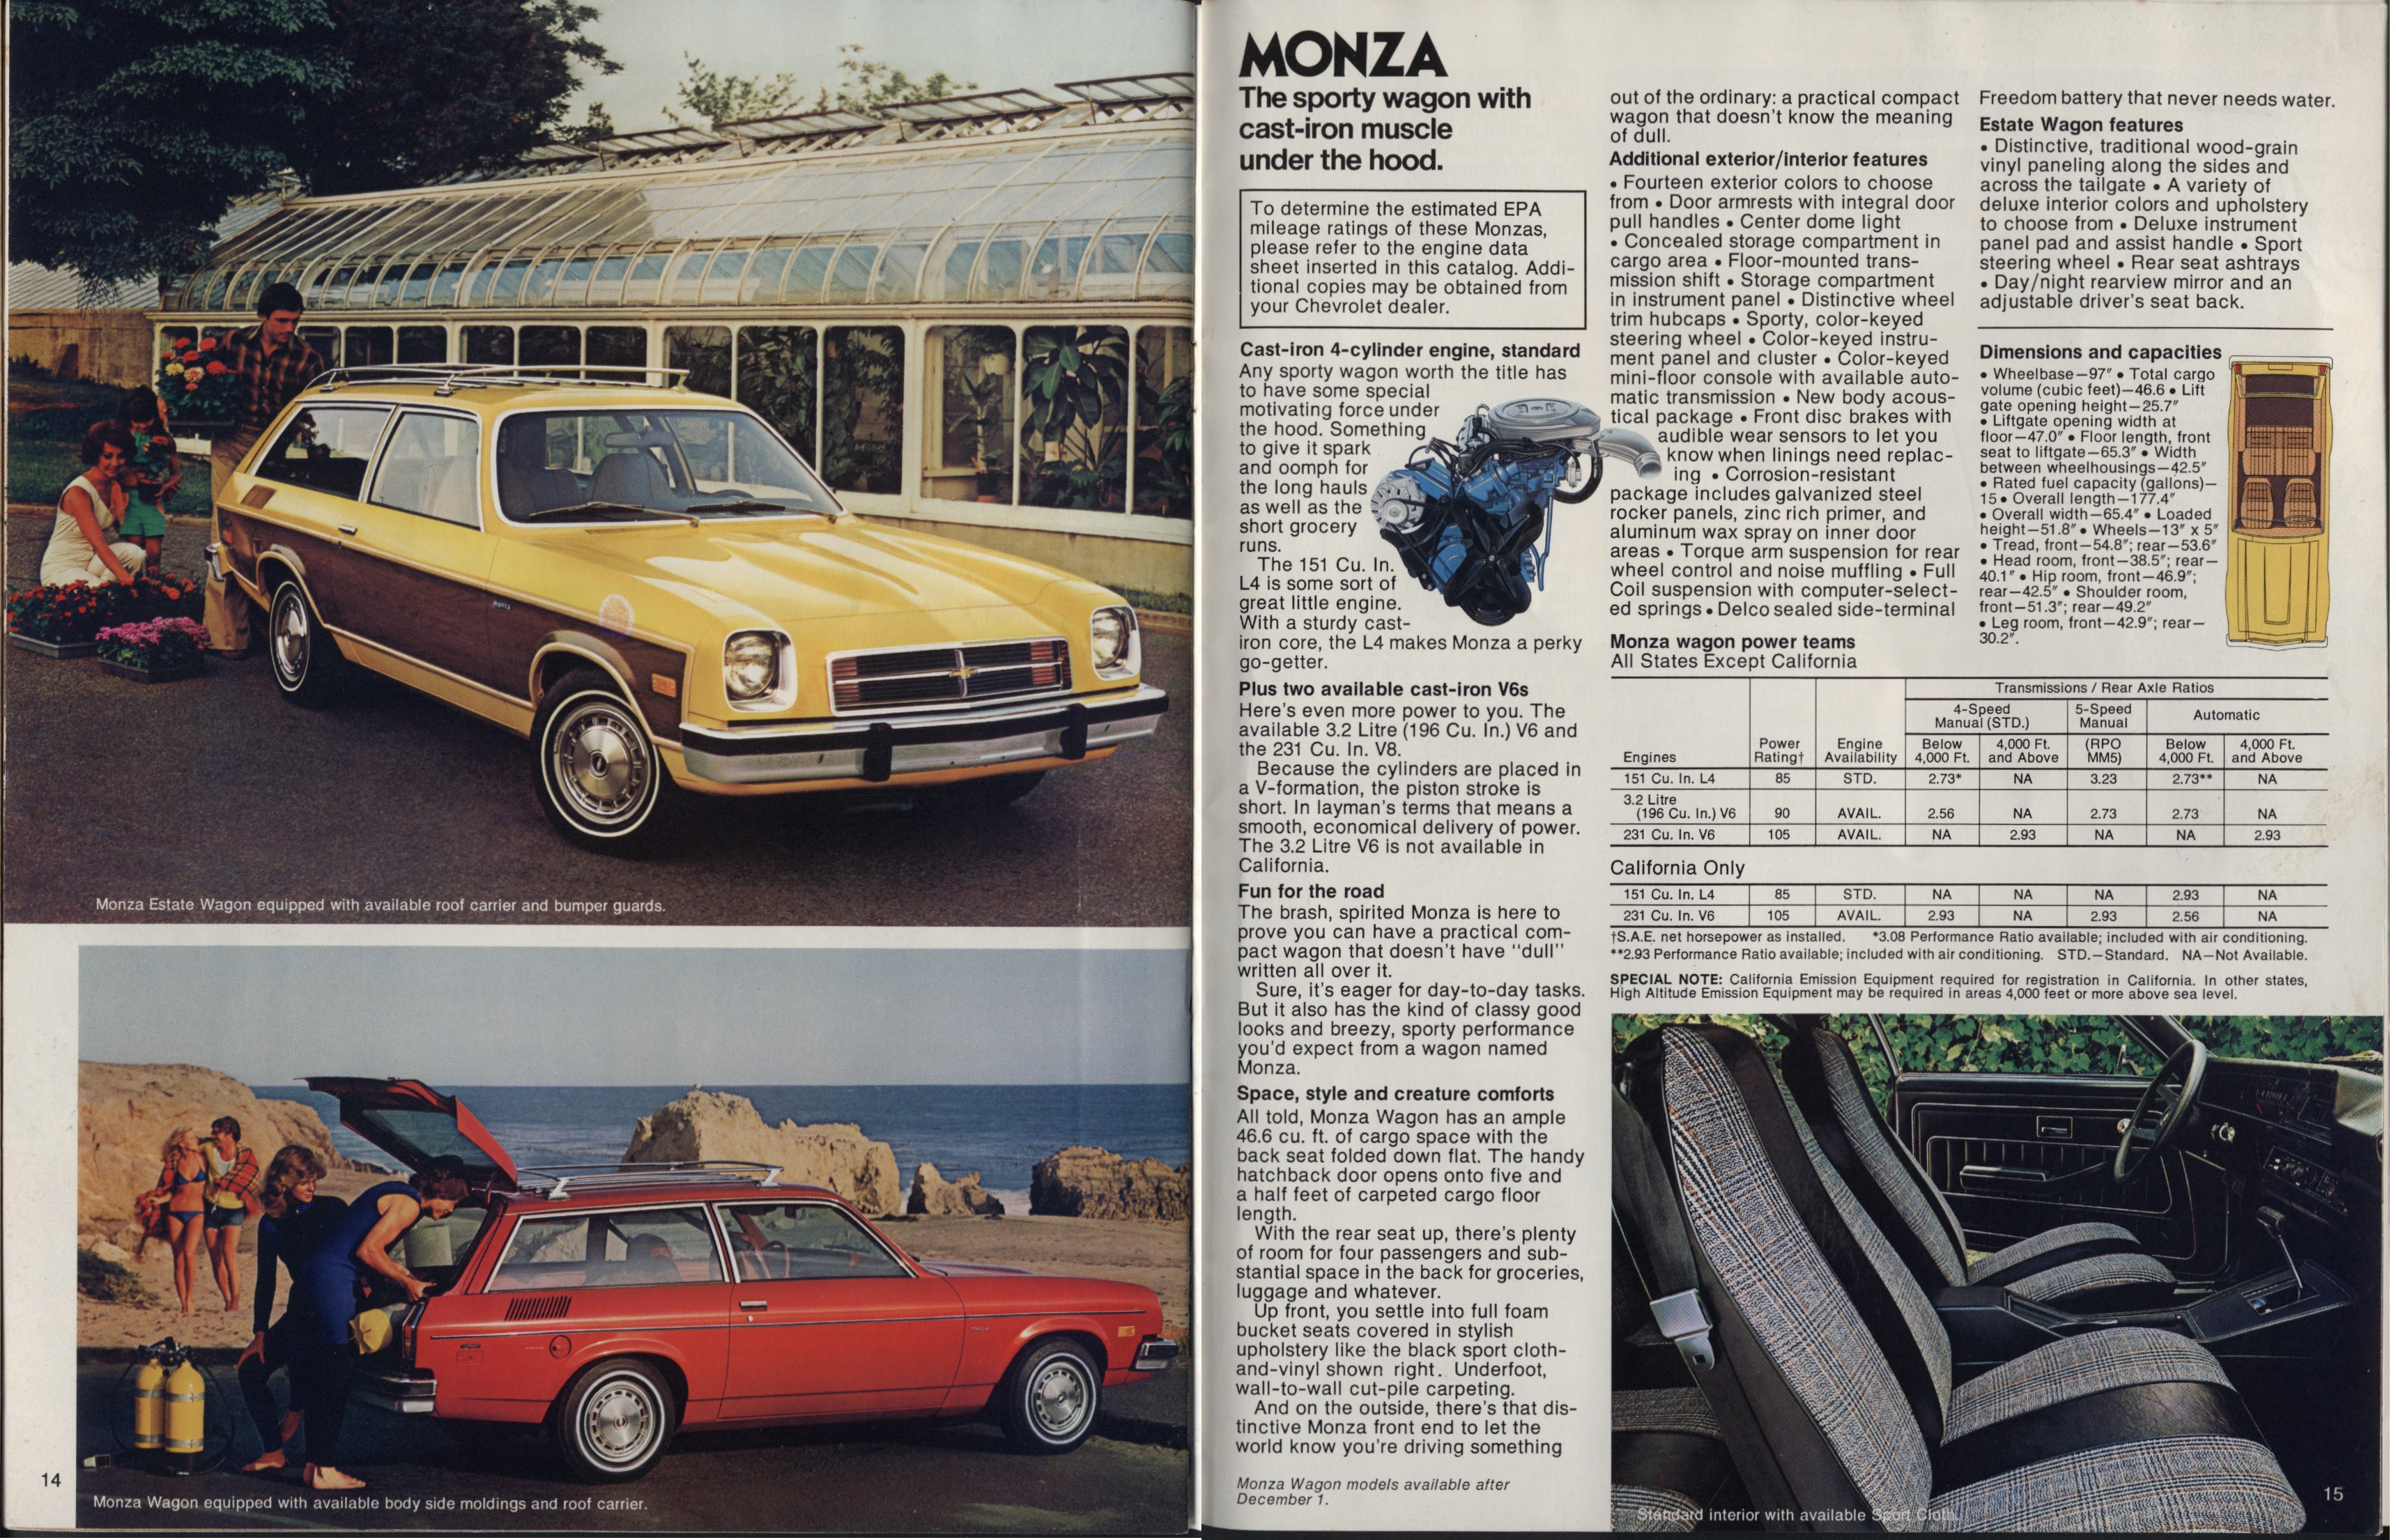 1978 Chevrolet Wagons Brochure 14-15